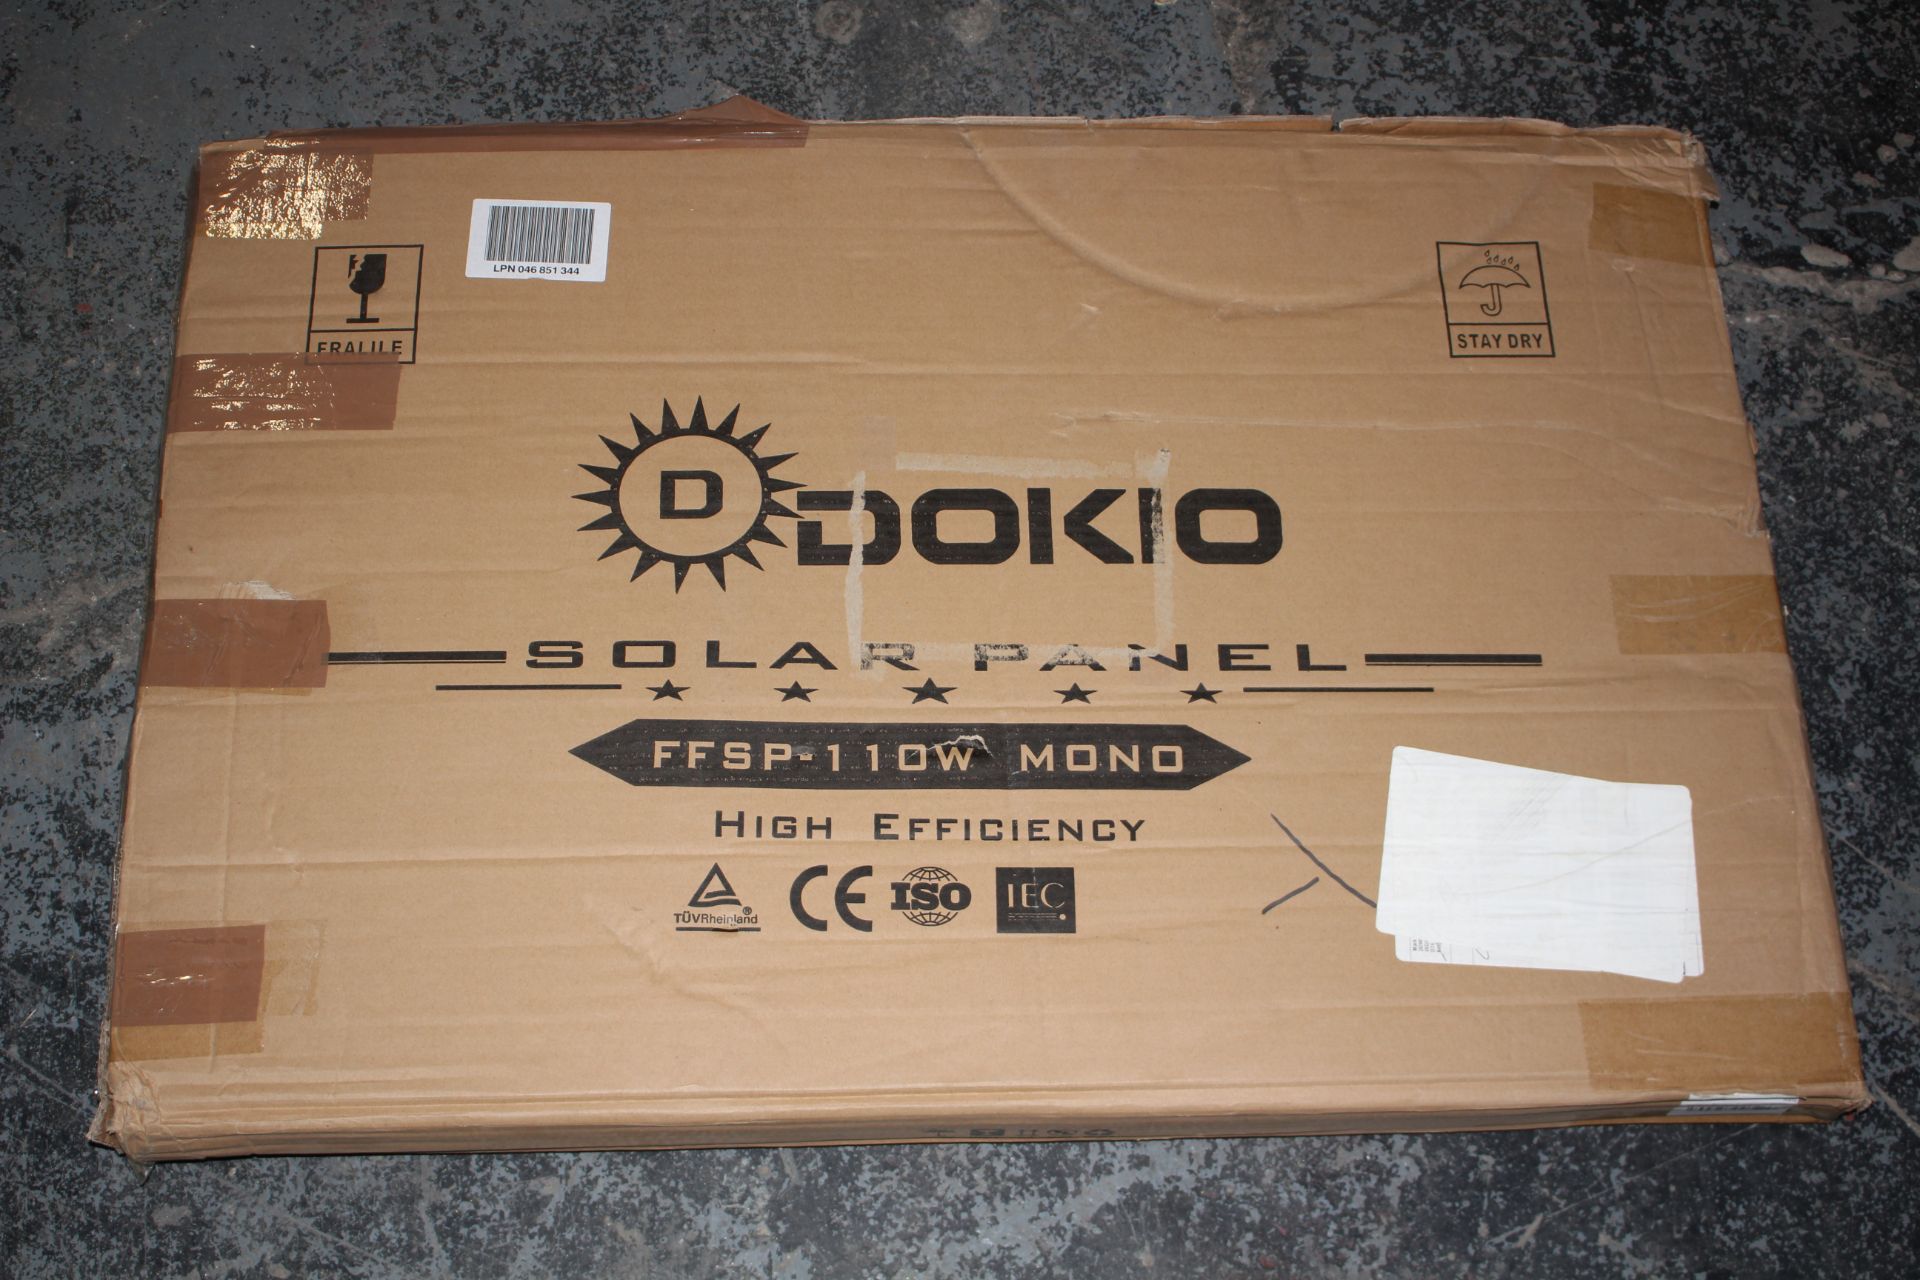 BOXED DOKIO SOLAR PANEL HIGH EFFICIENCY MODEL: FFSP-110W MONO RRP £145.00Condition ReportAppraisal